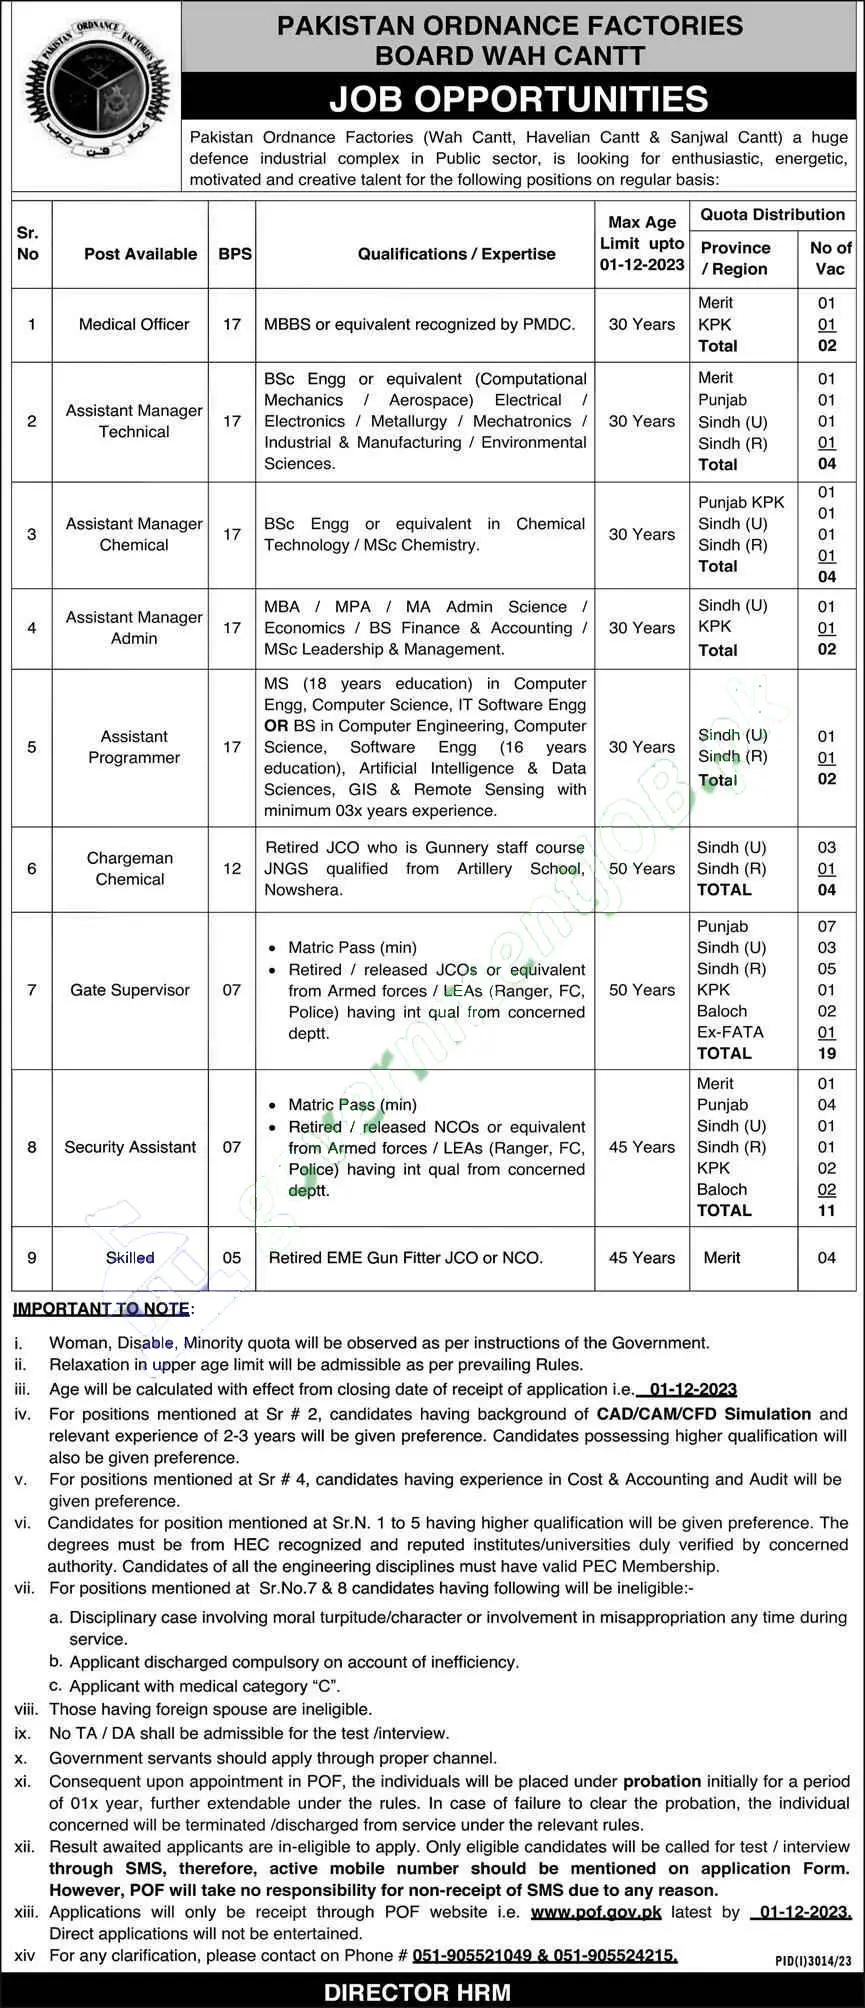 Pakistan Ordnance Factories POF Jobs 2023 Latest Vacancies and How